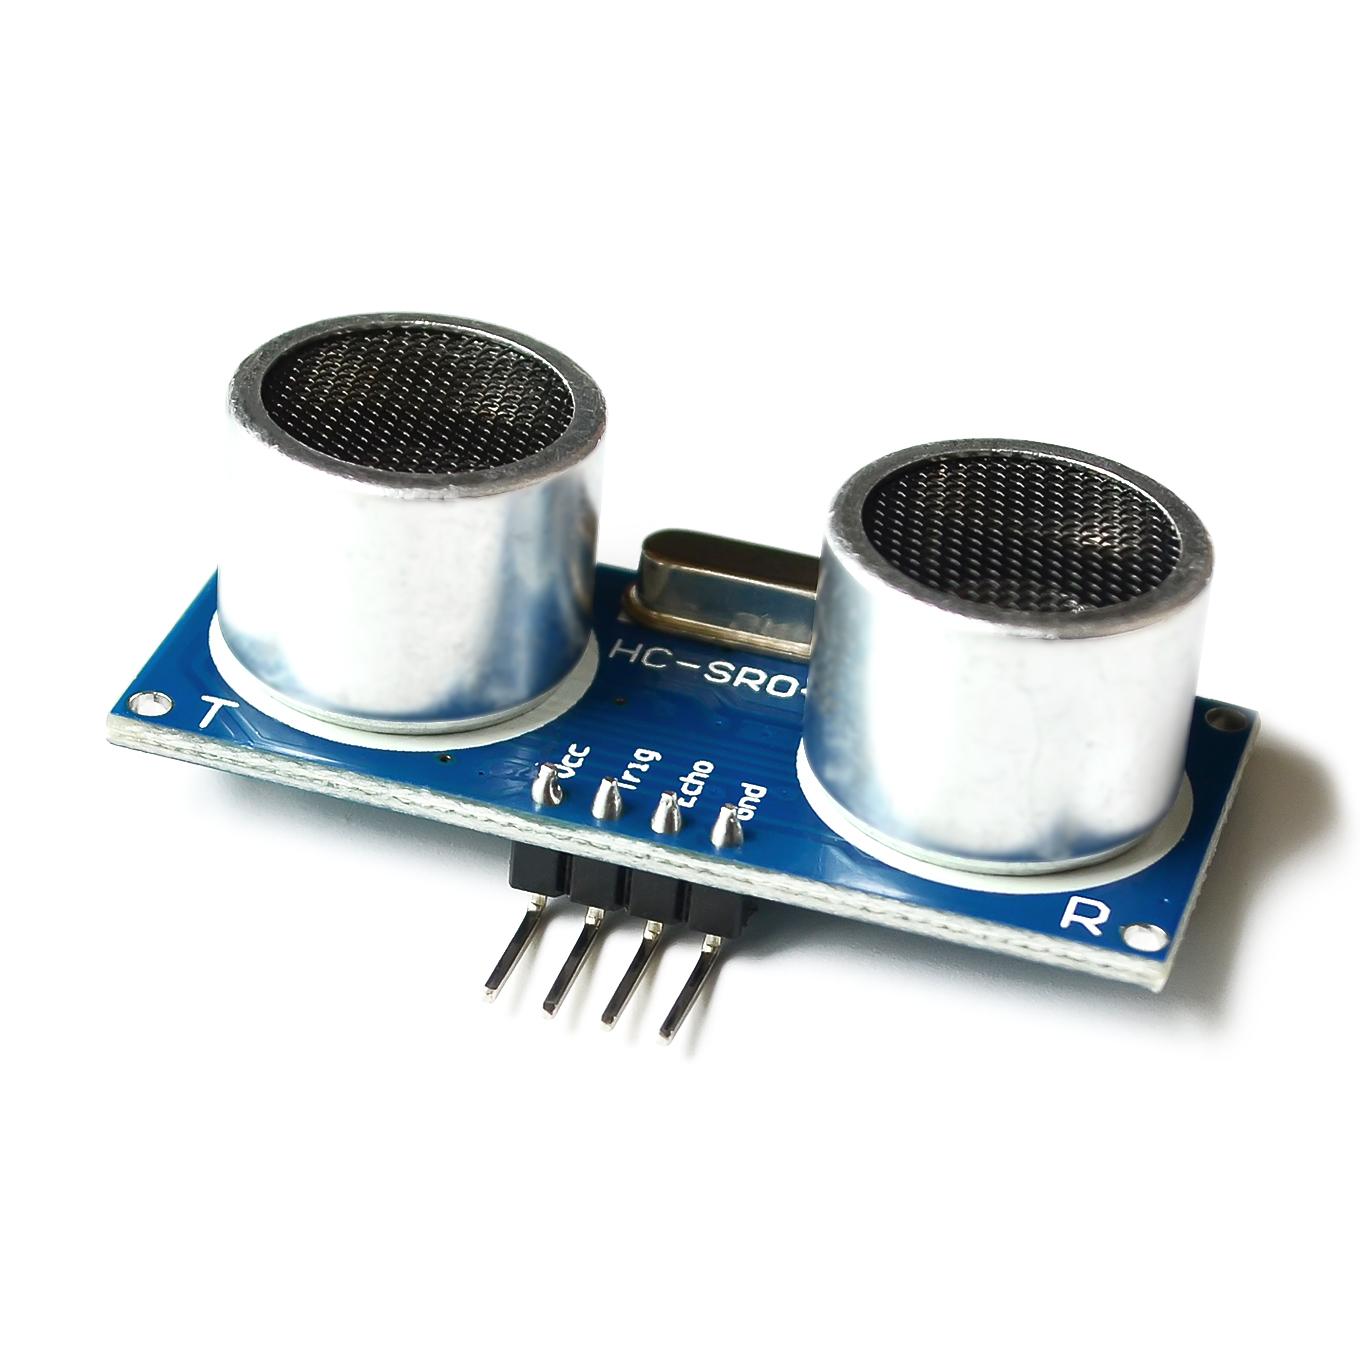 Ultrasonic Module HC-SR04 Distance Measuring Transducer Sensor  Samples Best prices